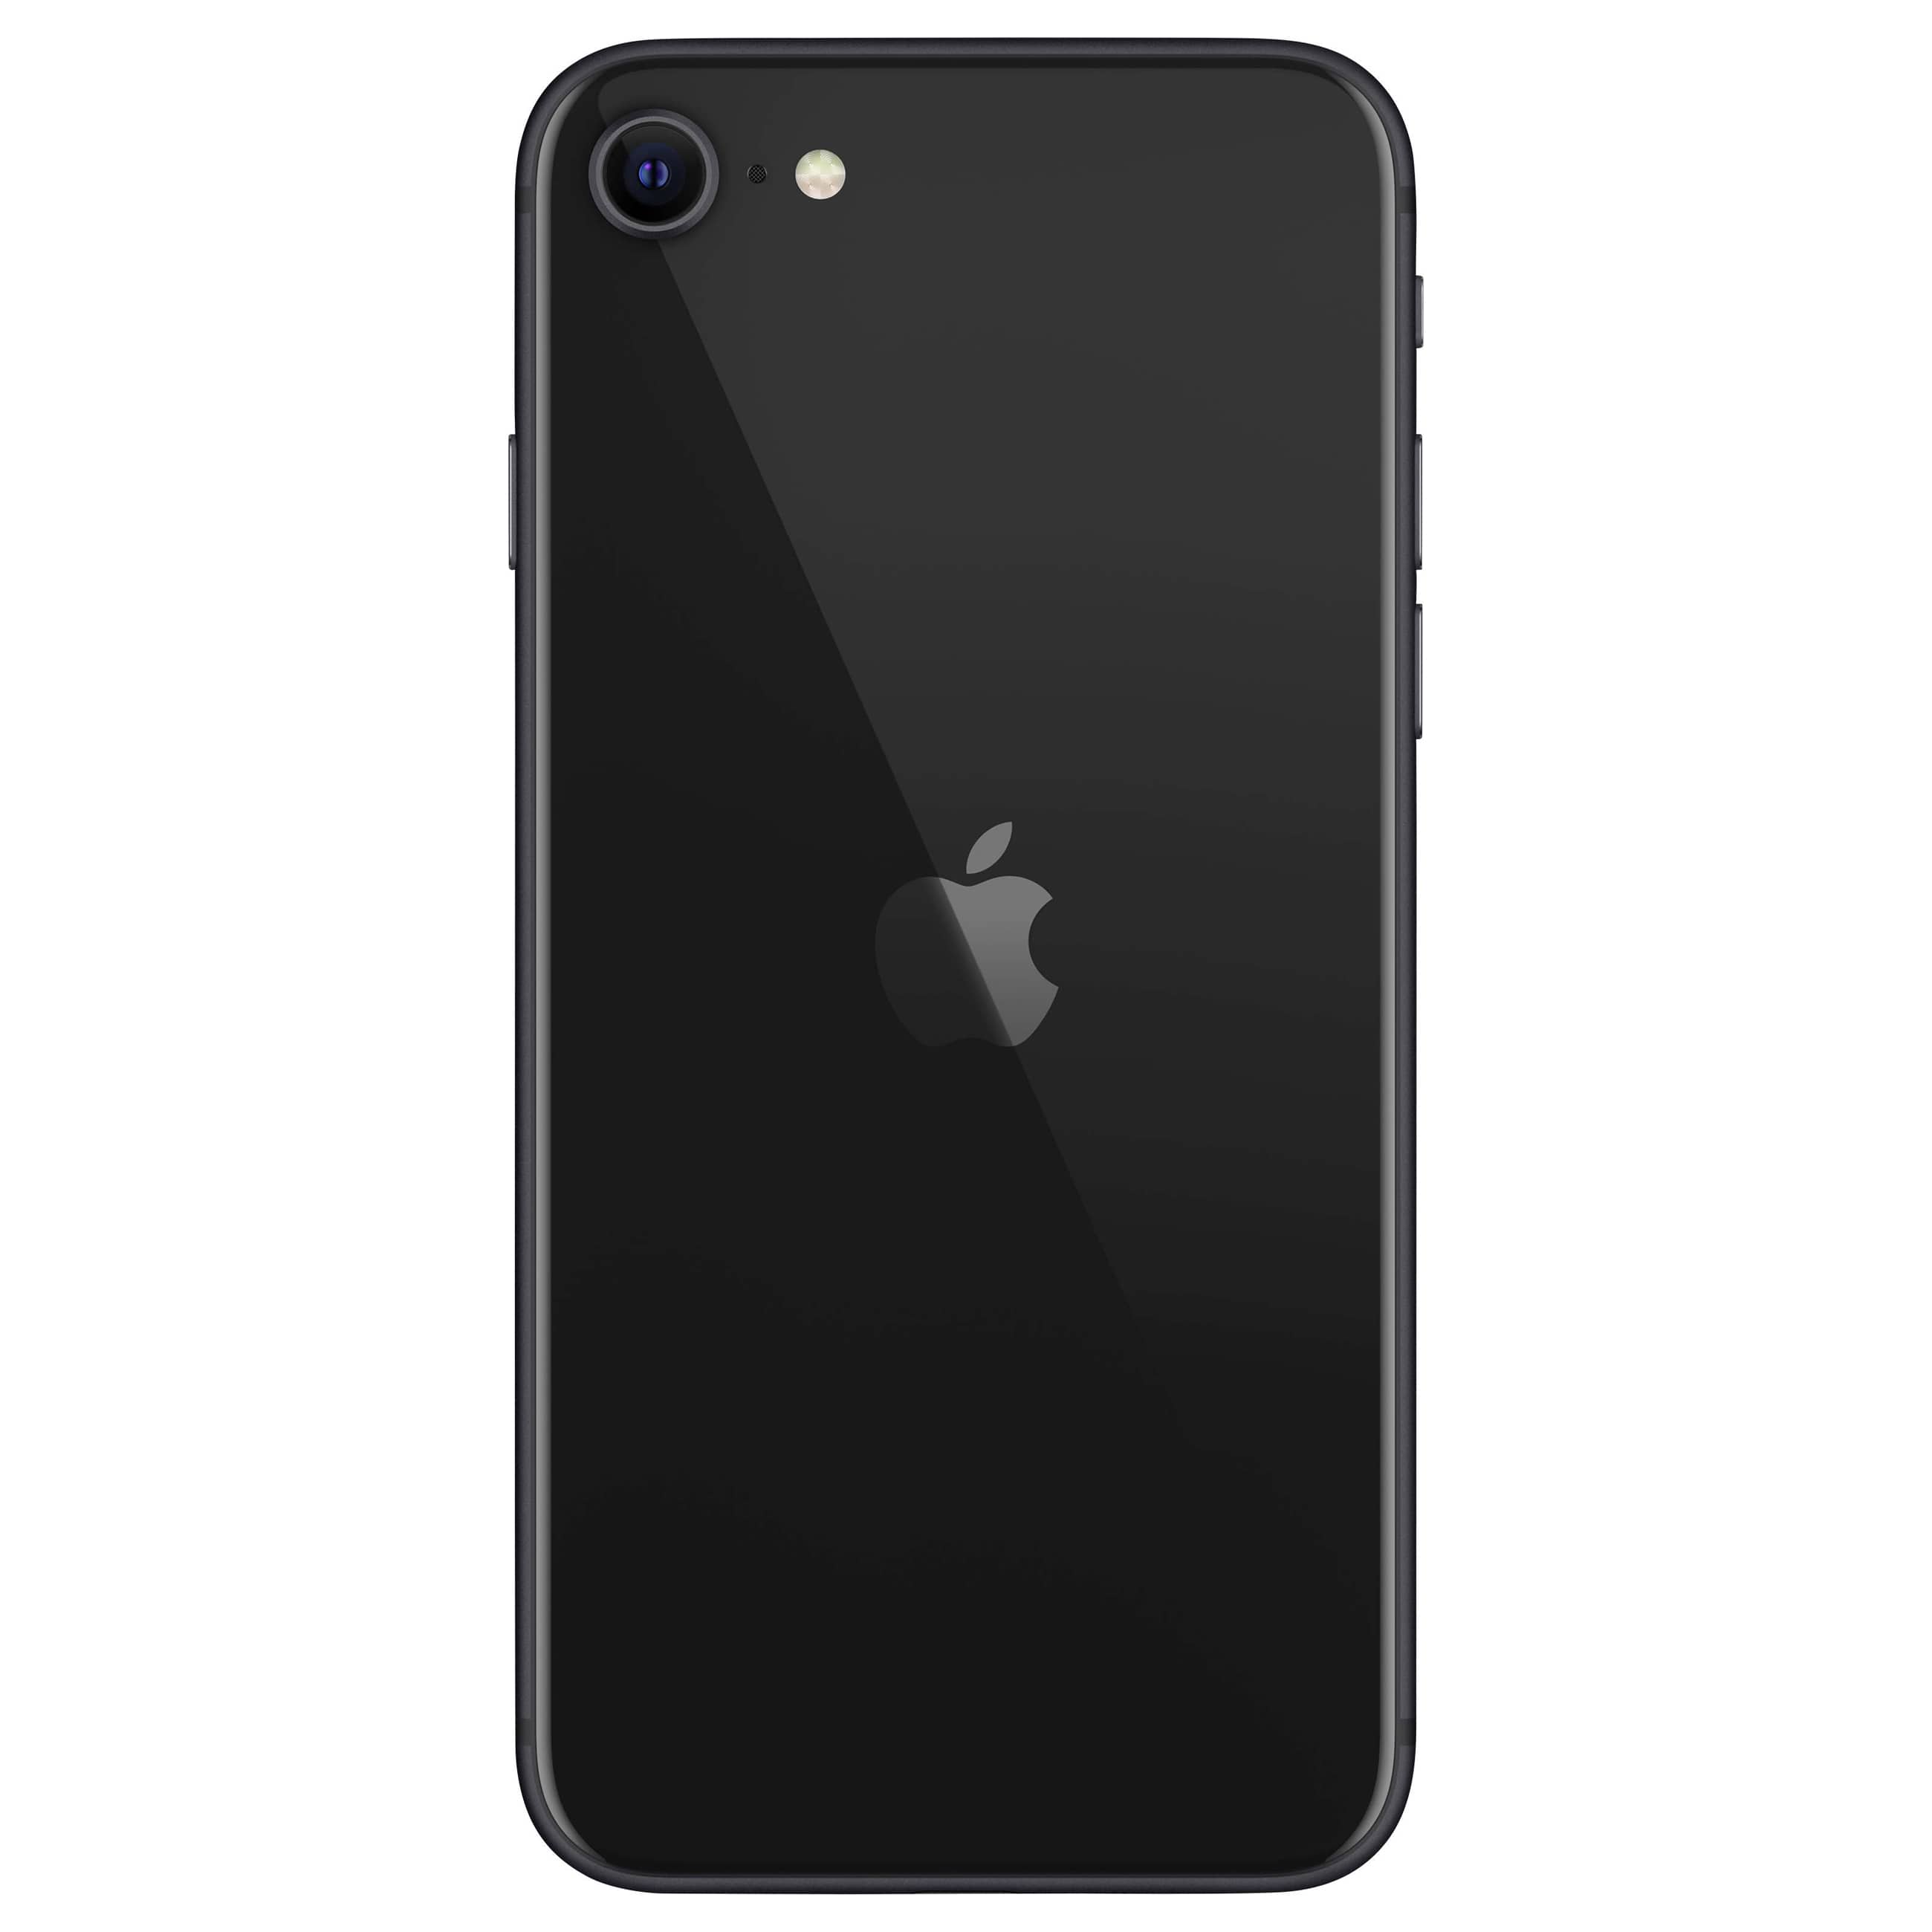 Apple iPhone SE (2020) - 64 GB - Black